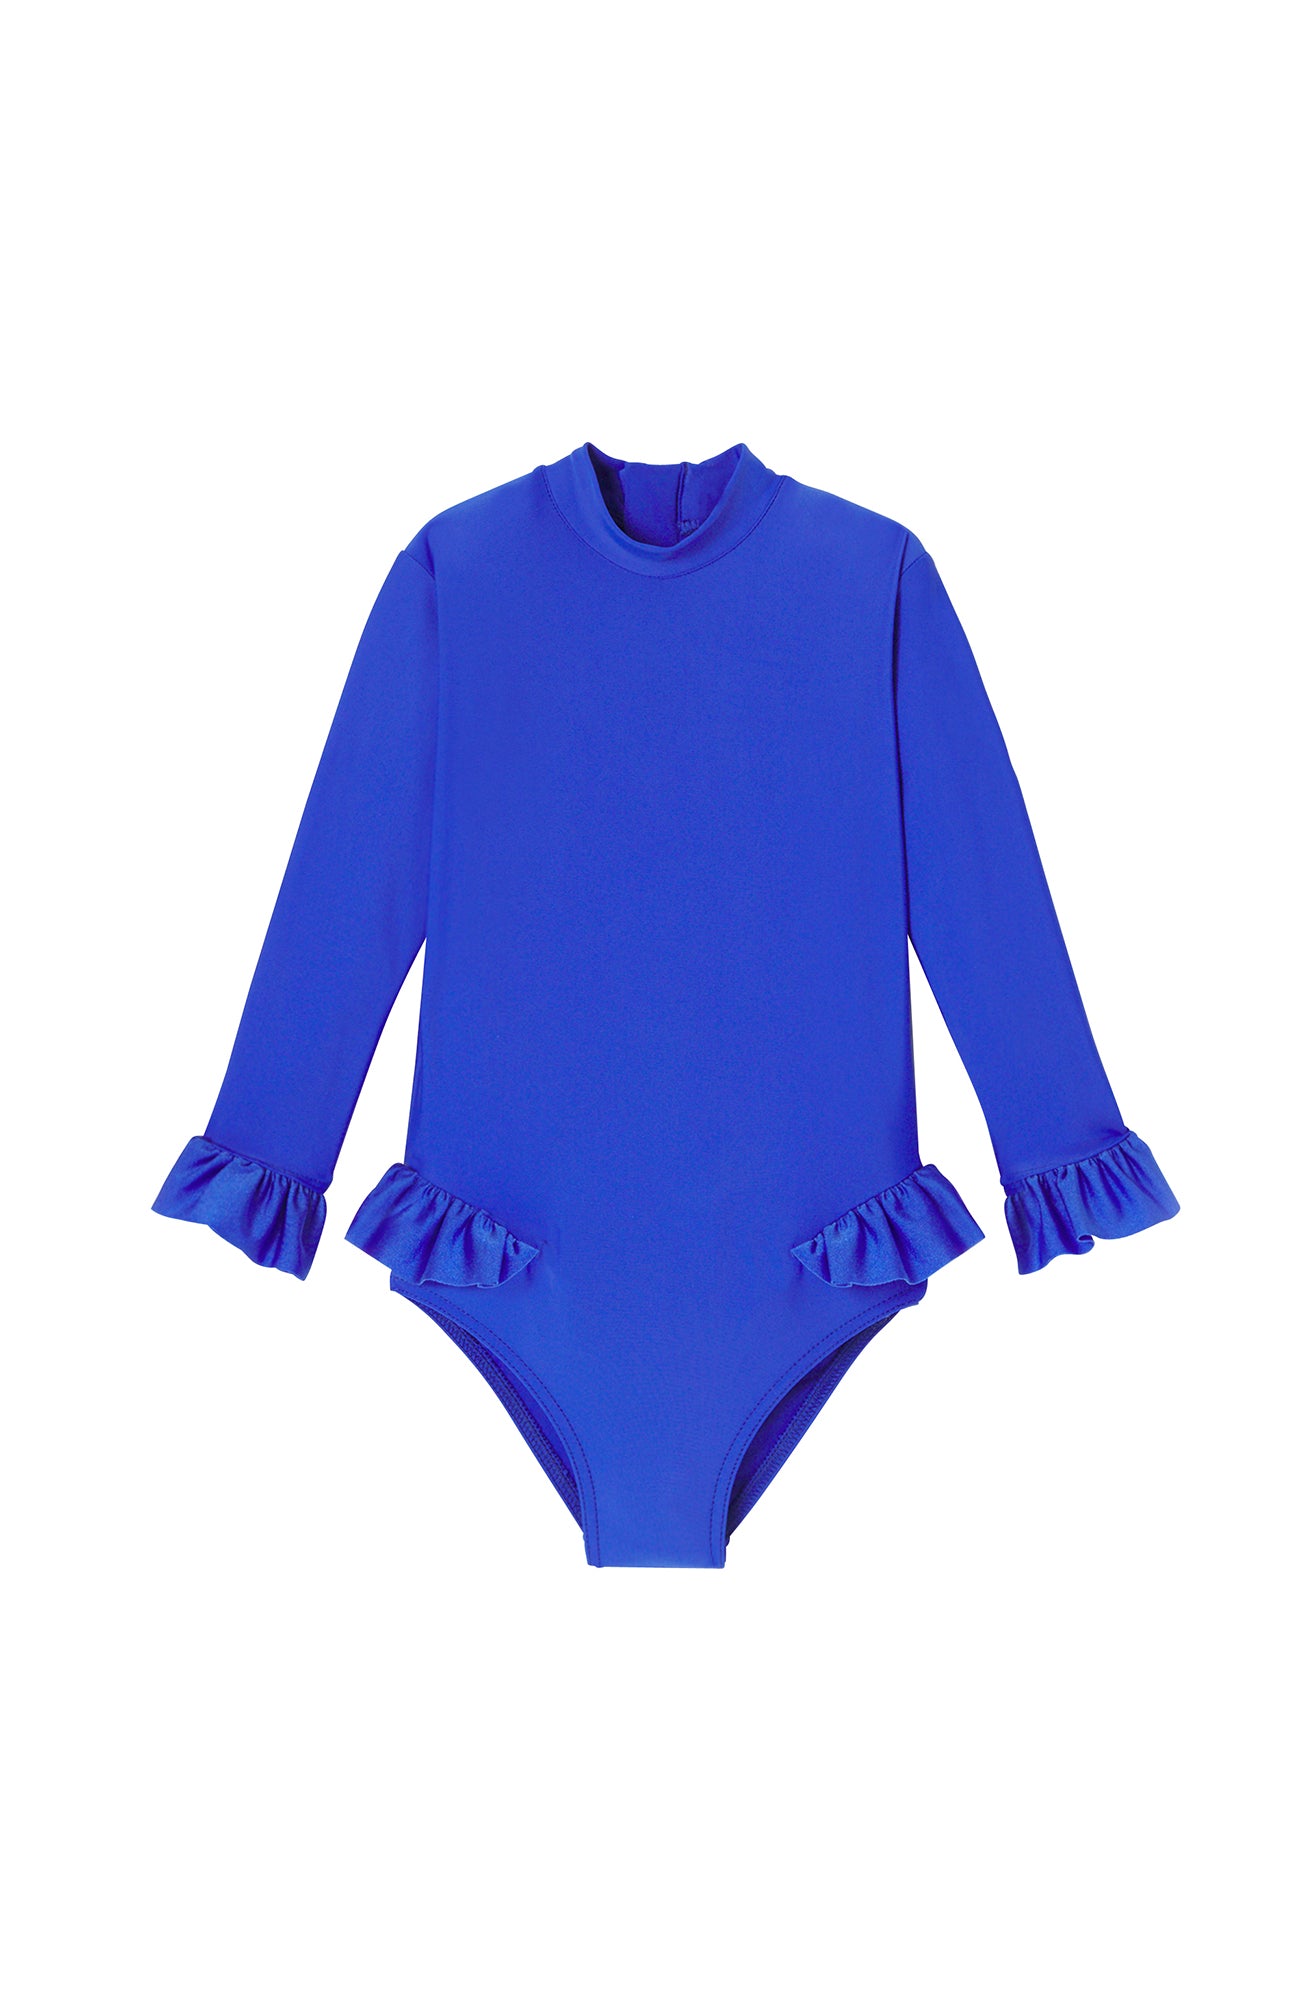 Baby girl's anti-UV swimsuit, blue long sleeves| BORA BORA BABY